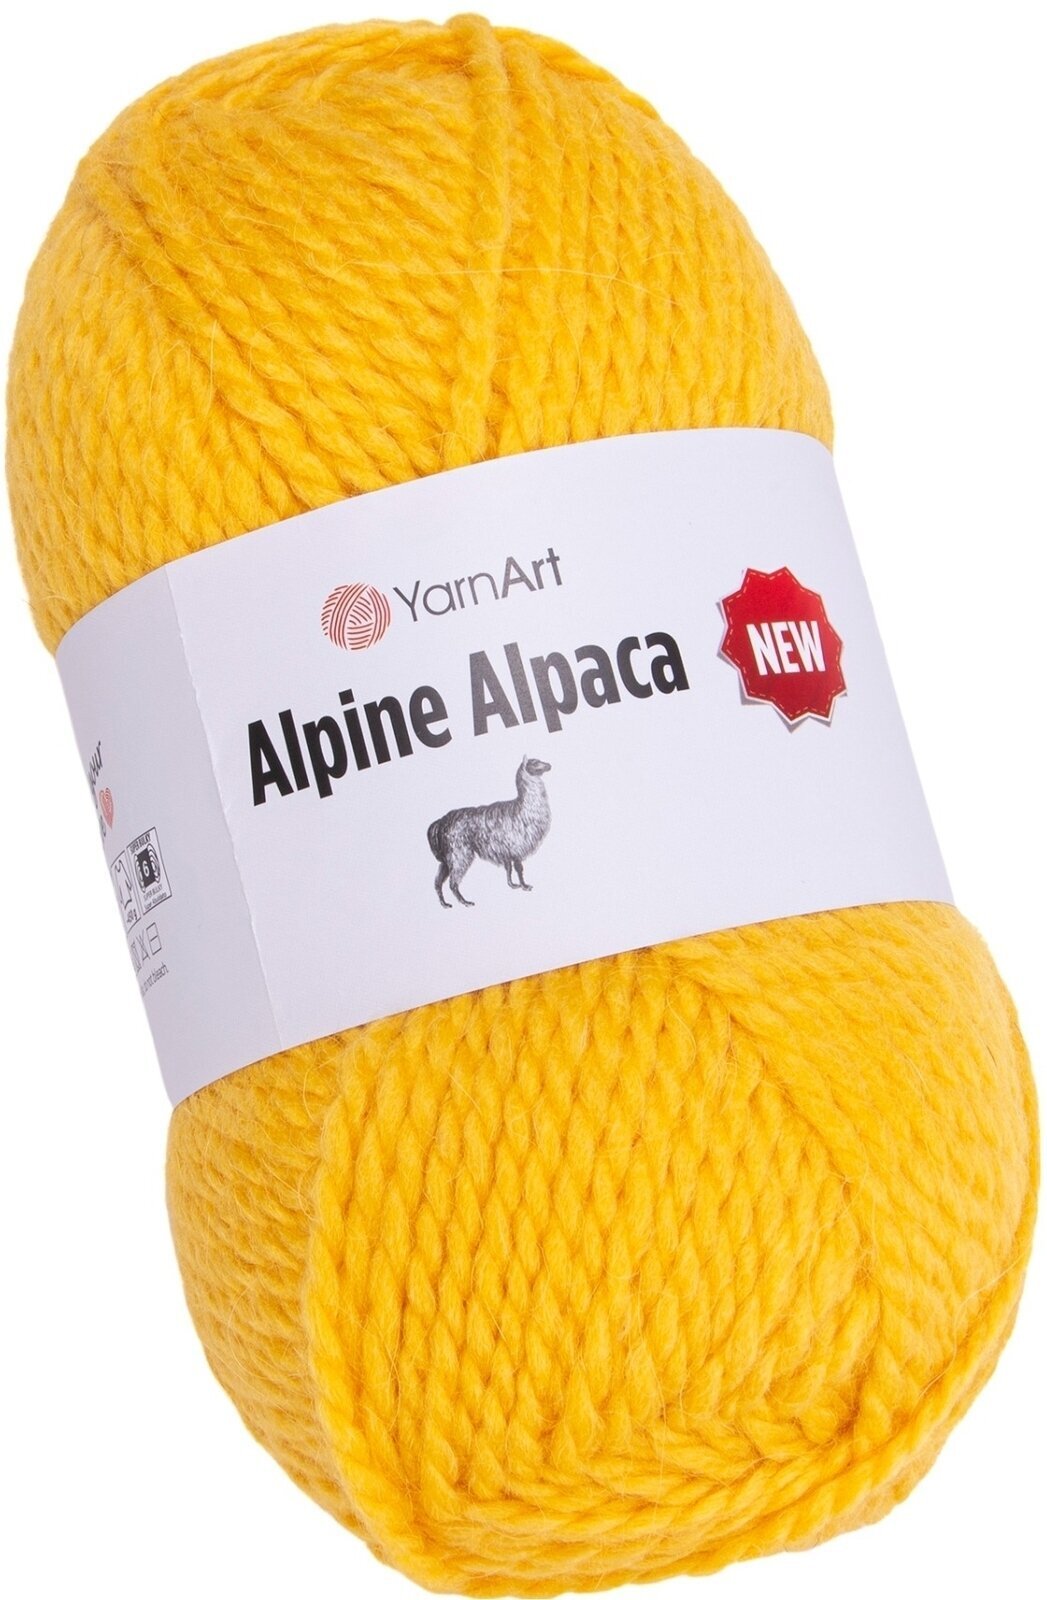 Knitting Yarn Yarn Art Alpine Alpaca Knitting Yarn 1448